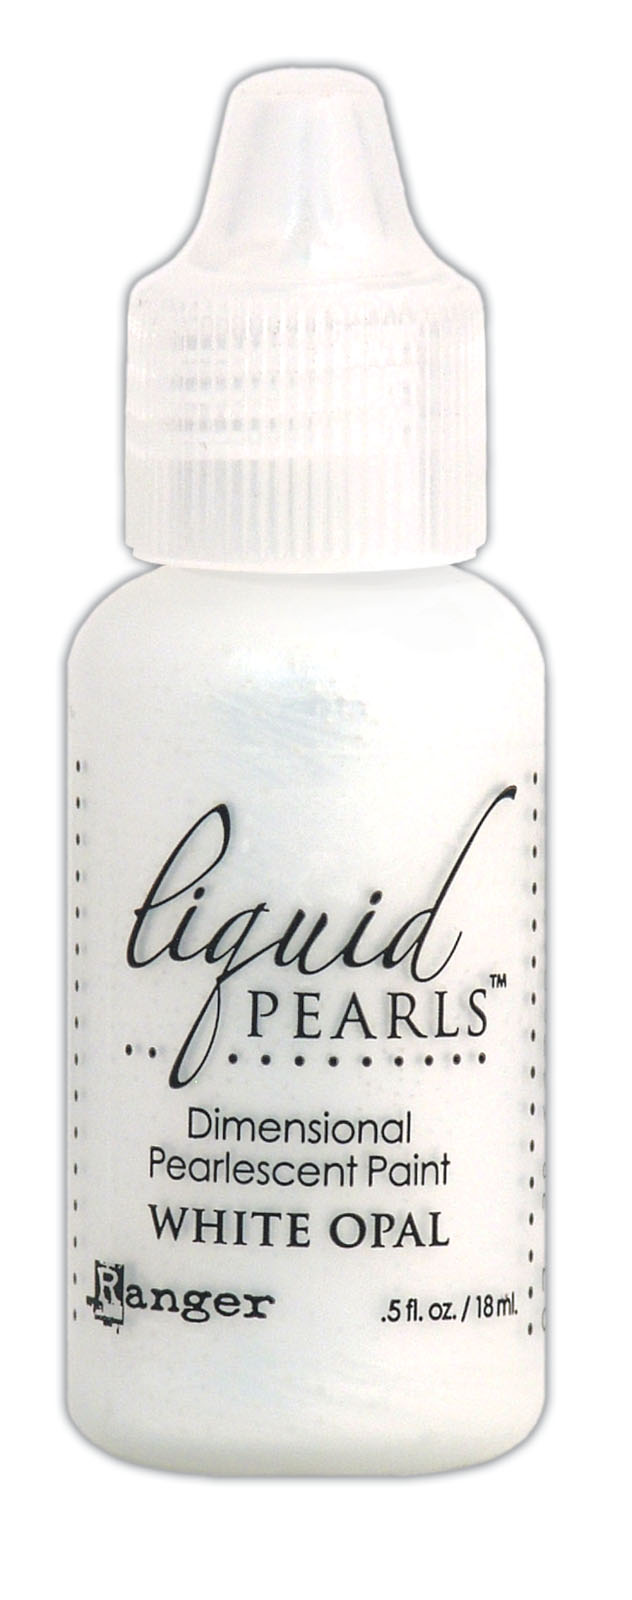 Liquid Pearls ranger liquid pearls - dimensional pearlescent paint